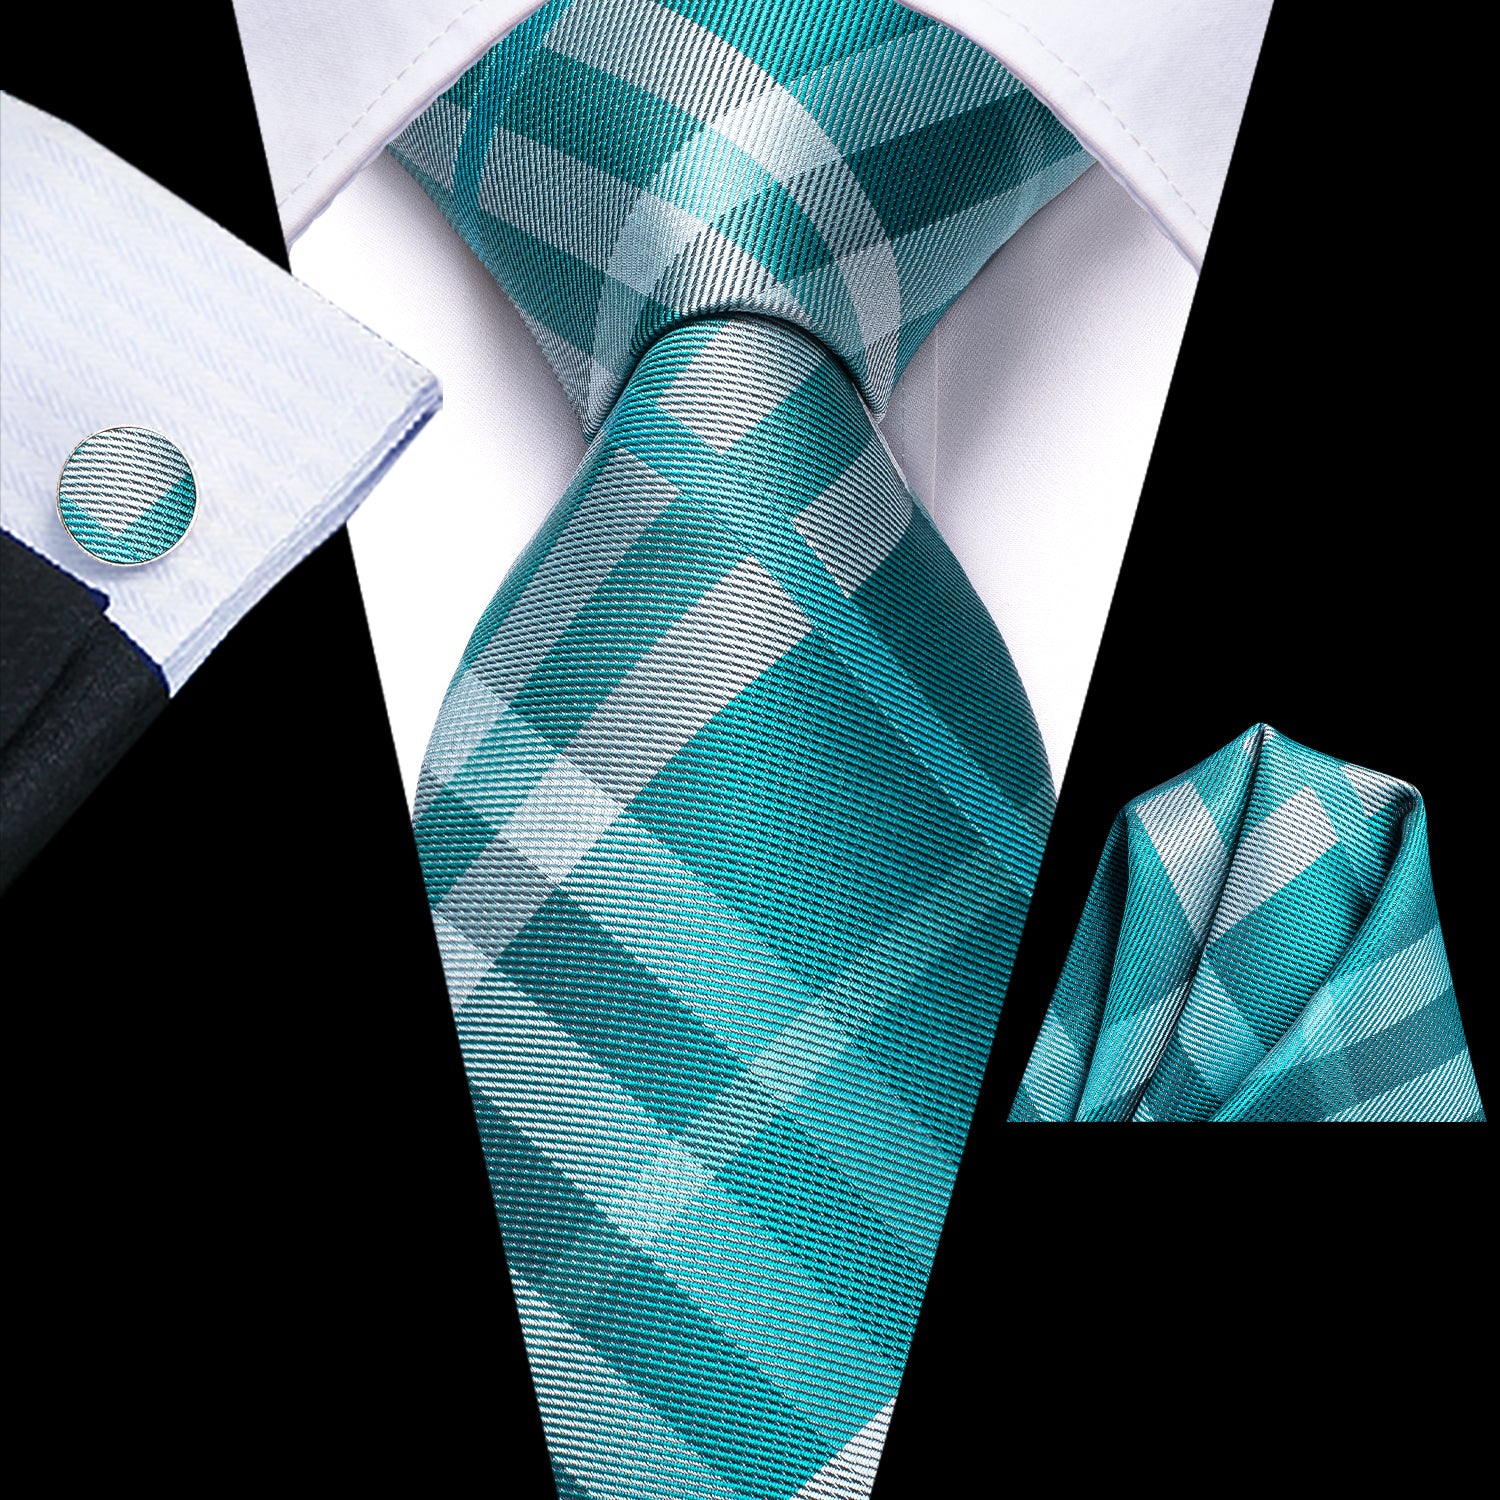 New Teal White Strip Tie Pocket Square Cufflinks Set